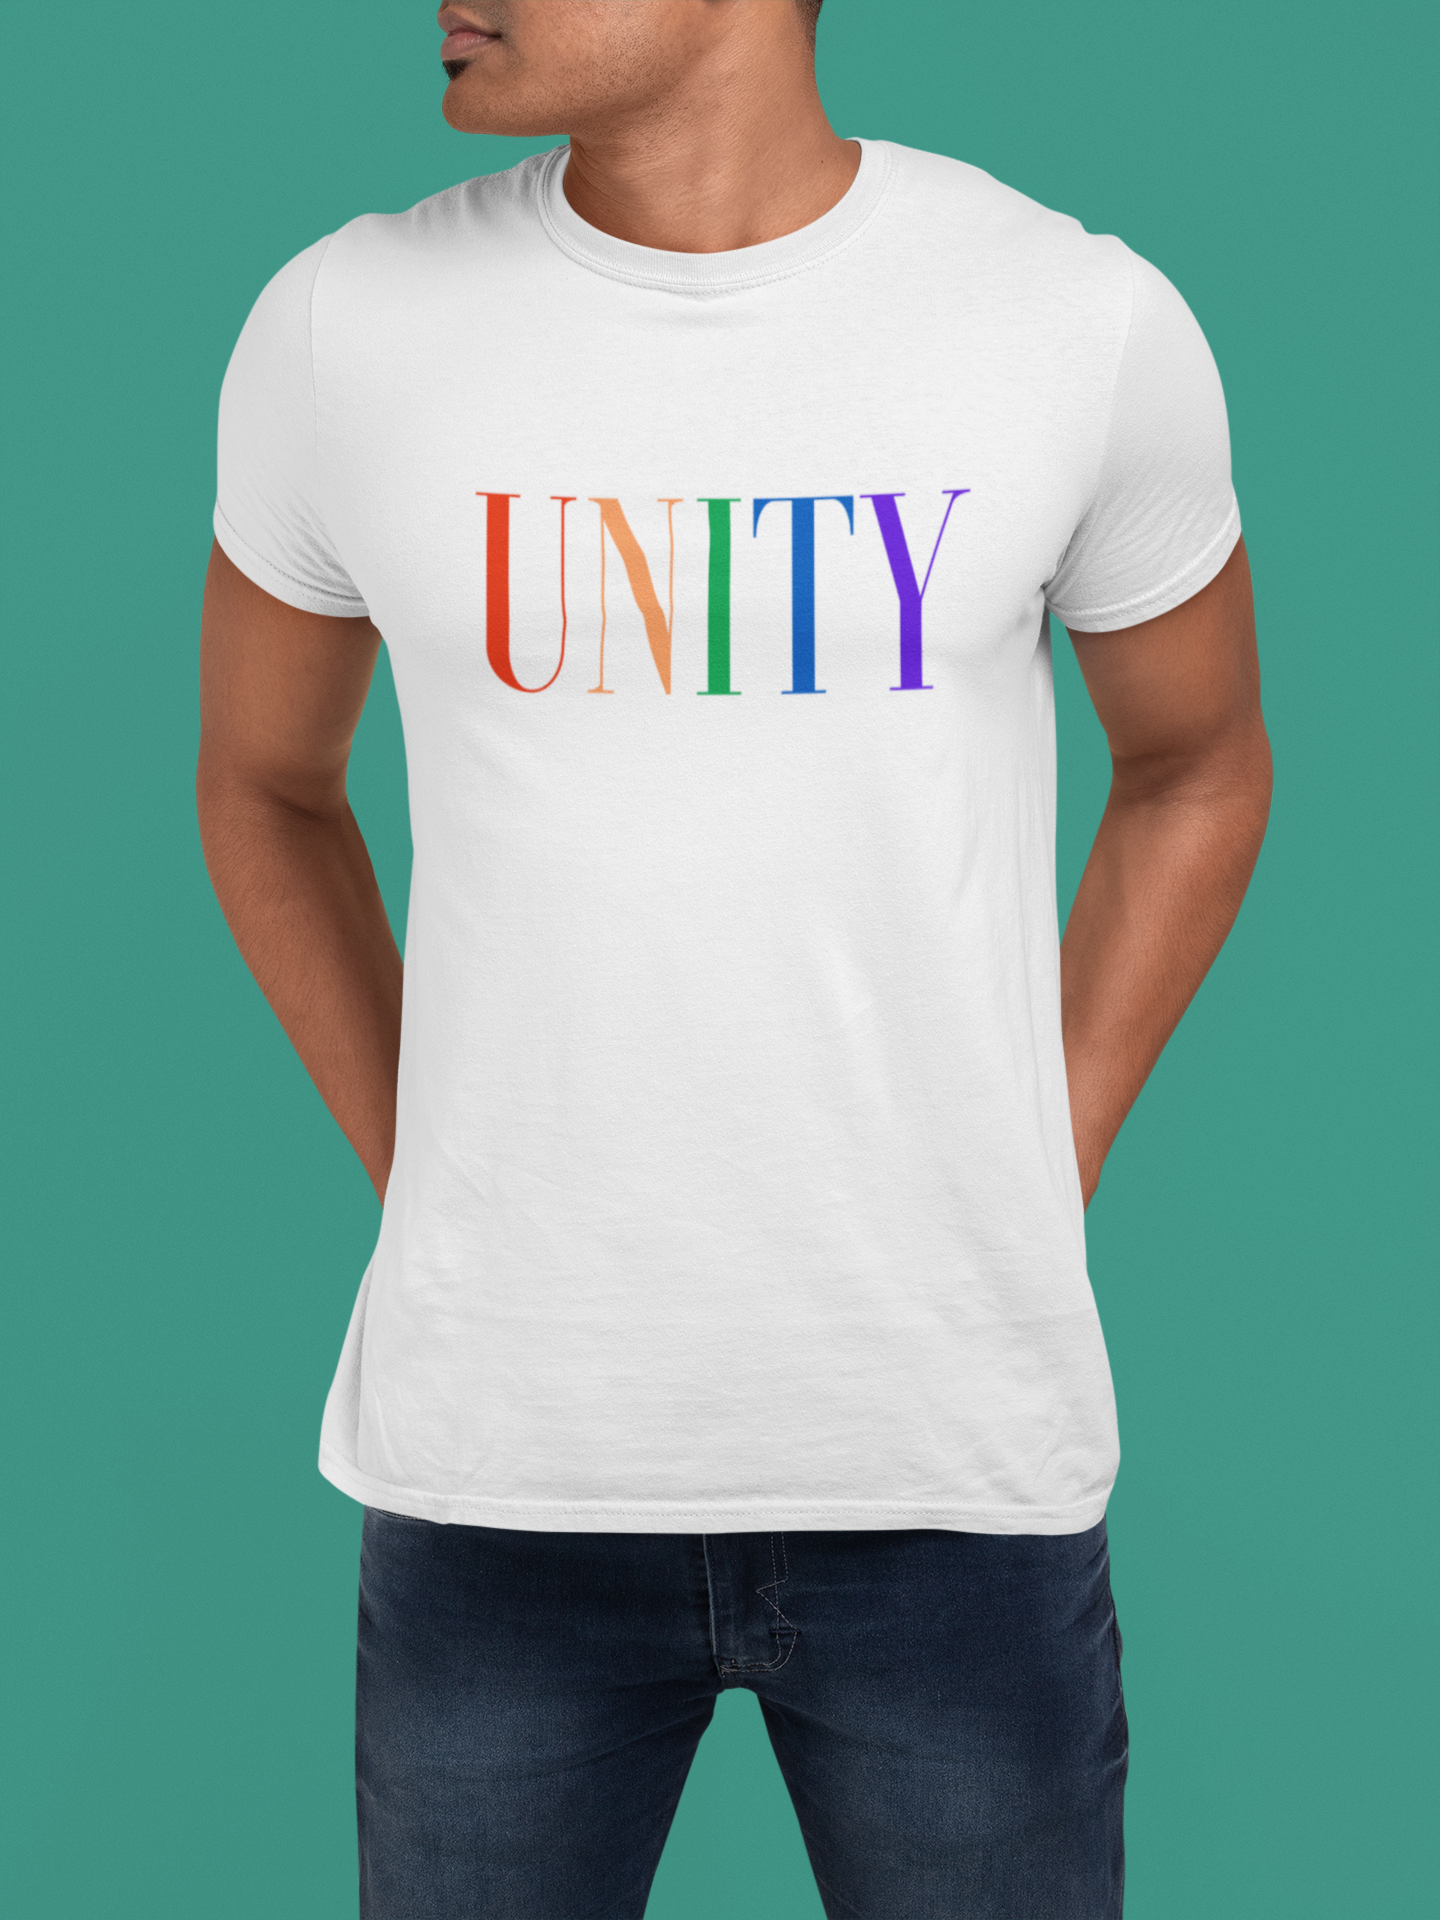 gucci rainbow shirt unity love happy tees